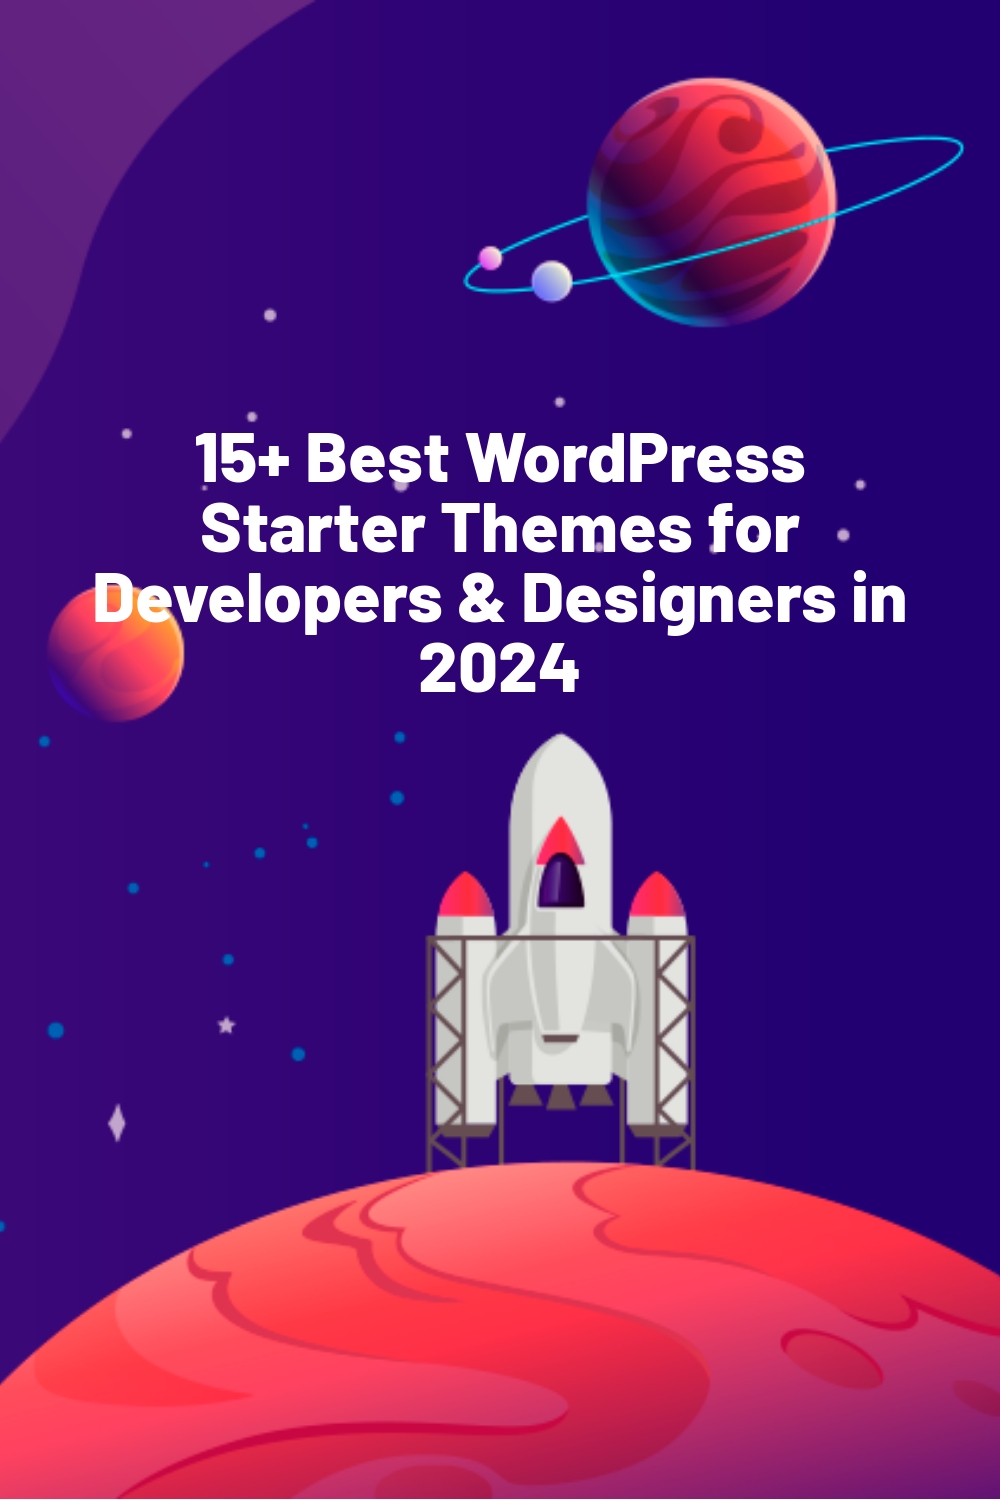 15+ Best WordPress Starter Themes for Developers & Designers in 2024